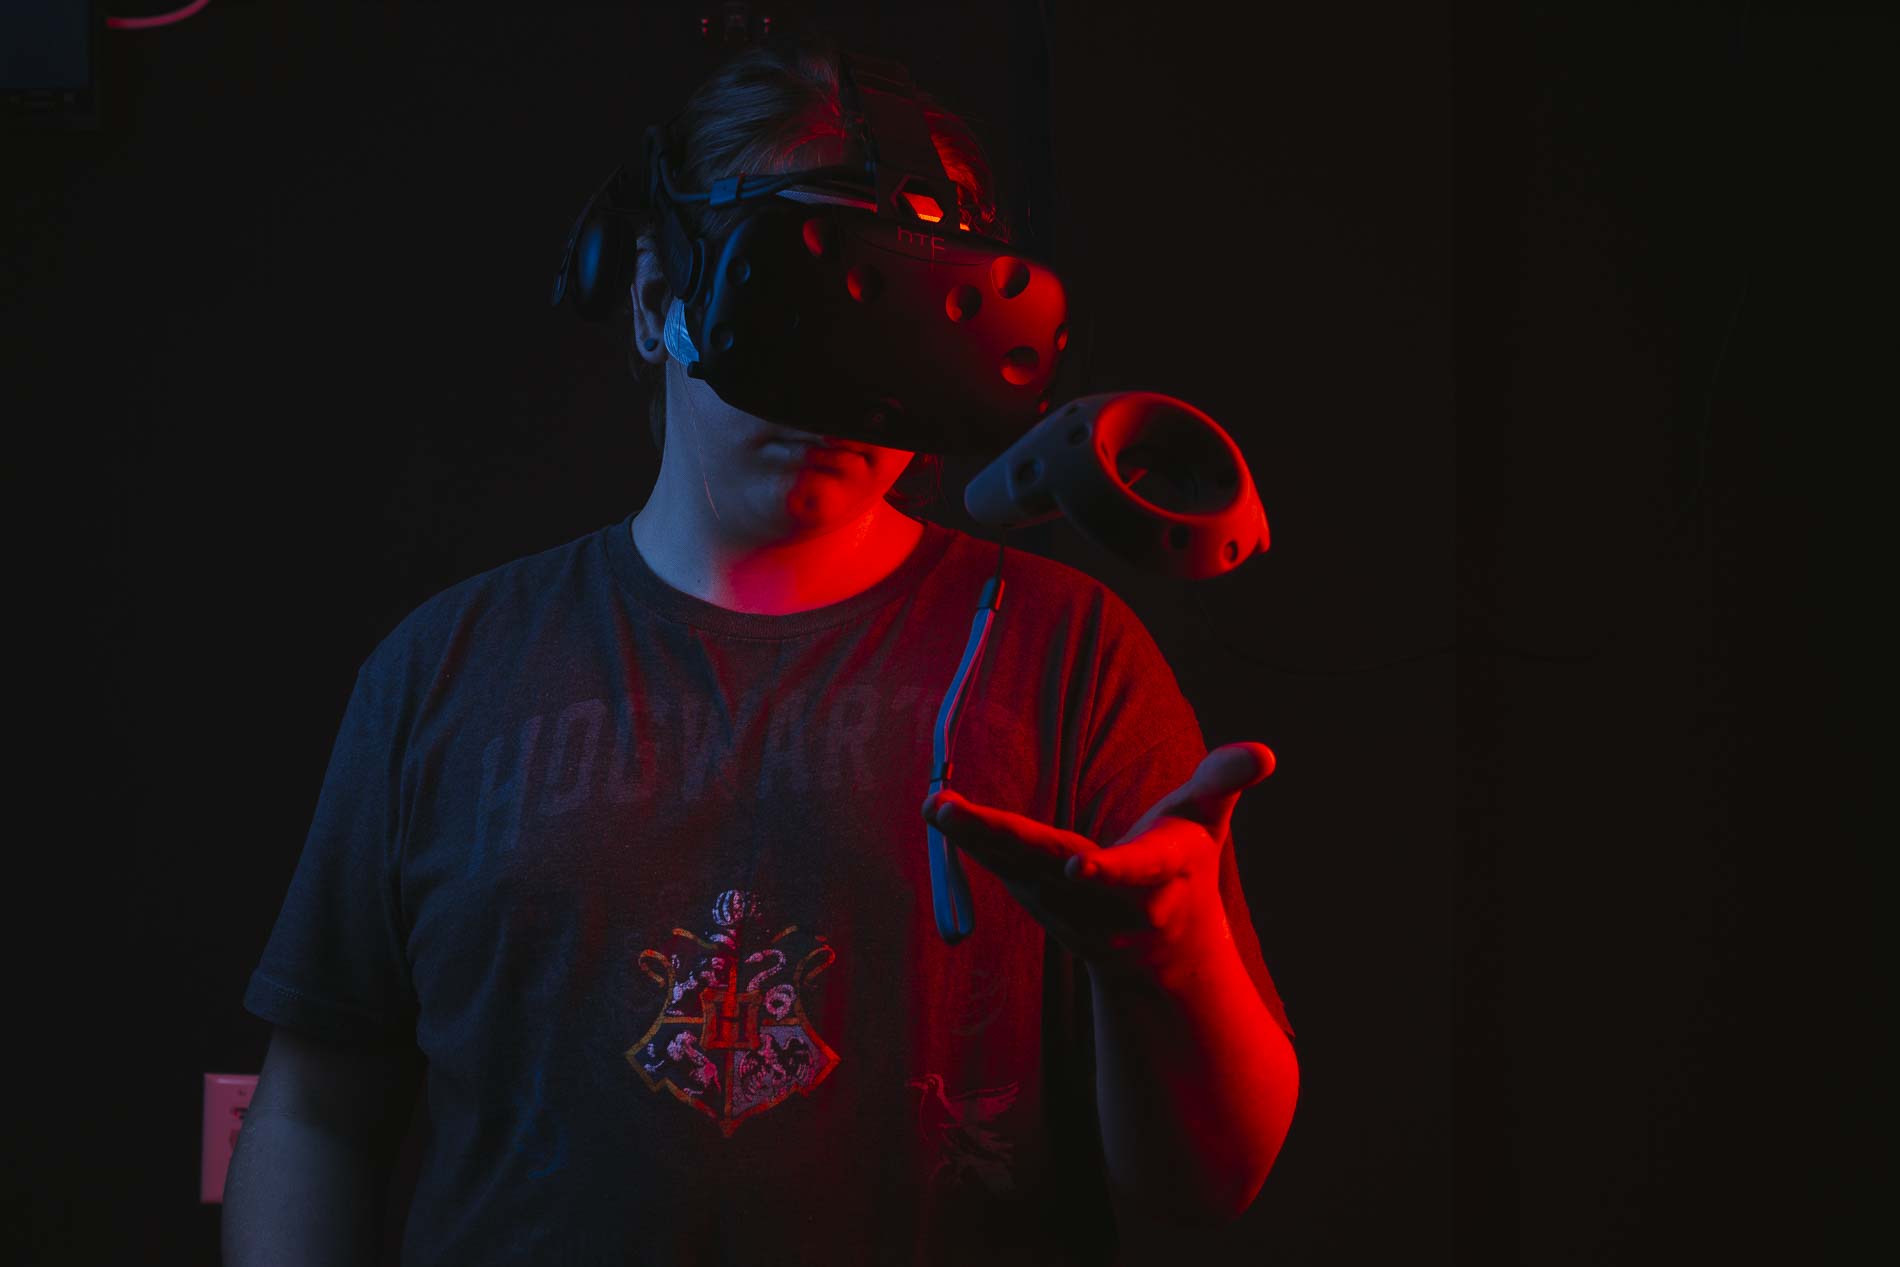  A Bluff City Virtual Reality employee uses reality augmentation equipment at the Cordova location. (Ziggy Mack)